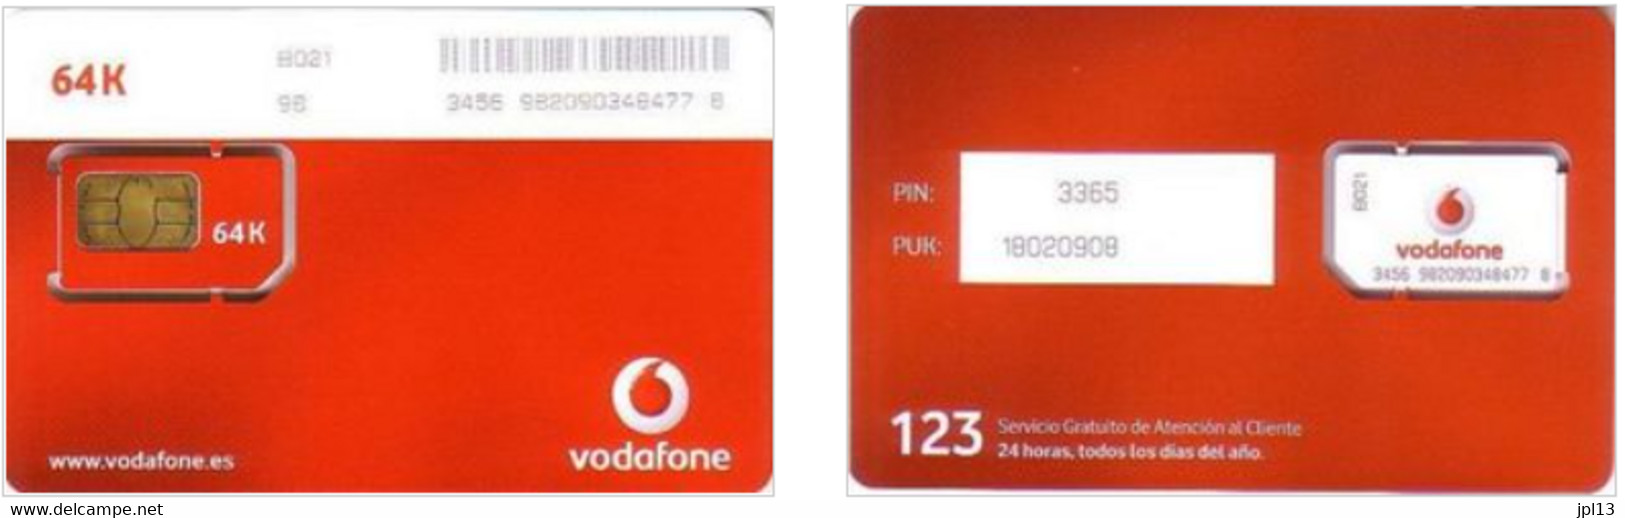 Carte SIM - Espagne - Vodafone - Vodafone Red Card 64K, Série B021 5520 - Vodafone